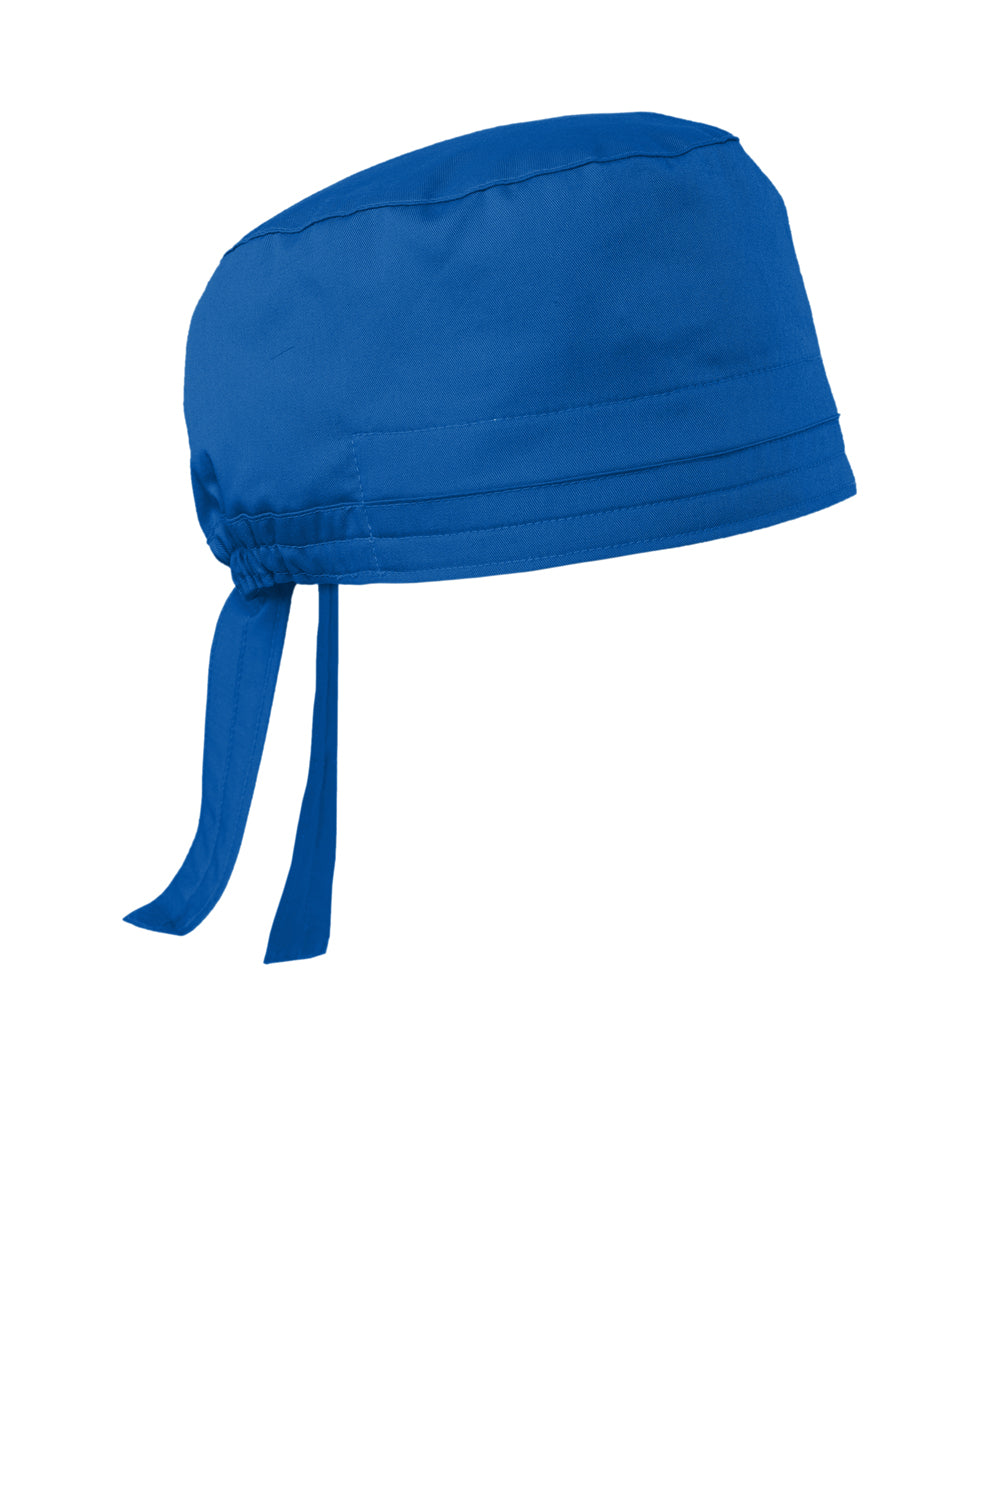 Wonderwink WW3040 WorkFlex Scrub Hat Royal Blue Front